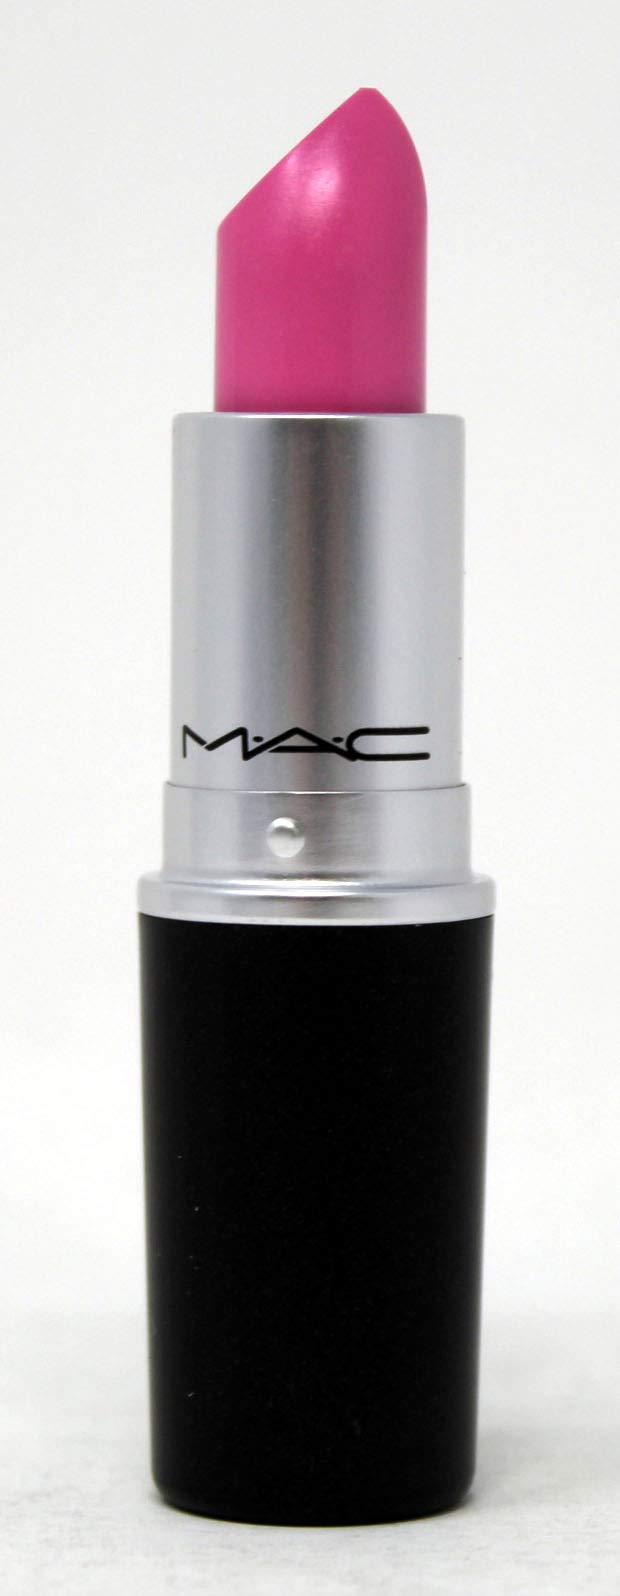 [Australia] - MAC Amplified Creme Lipstick, Saint germain, 120 Gram 